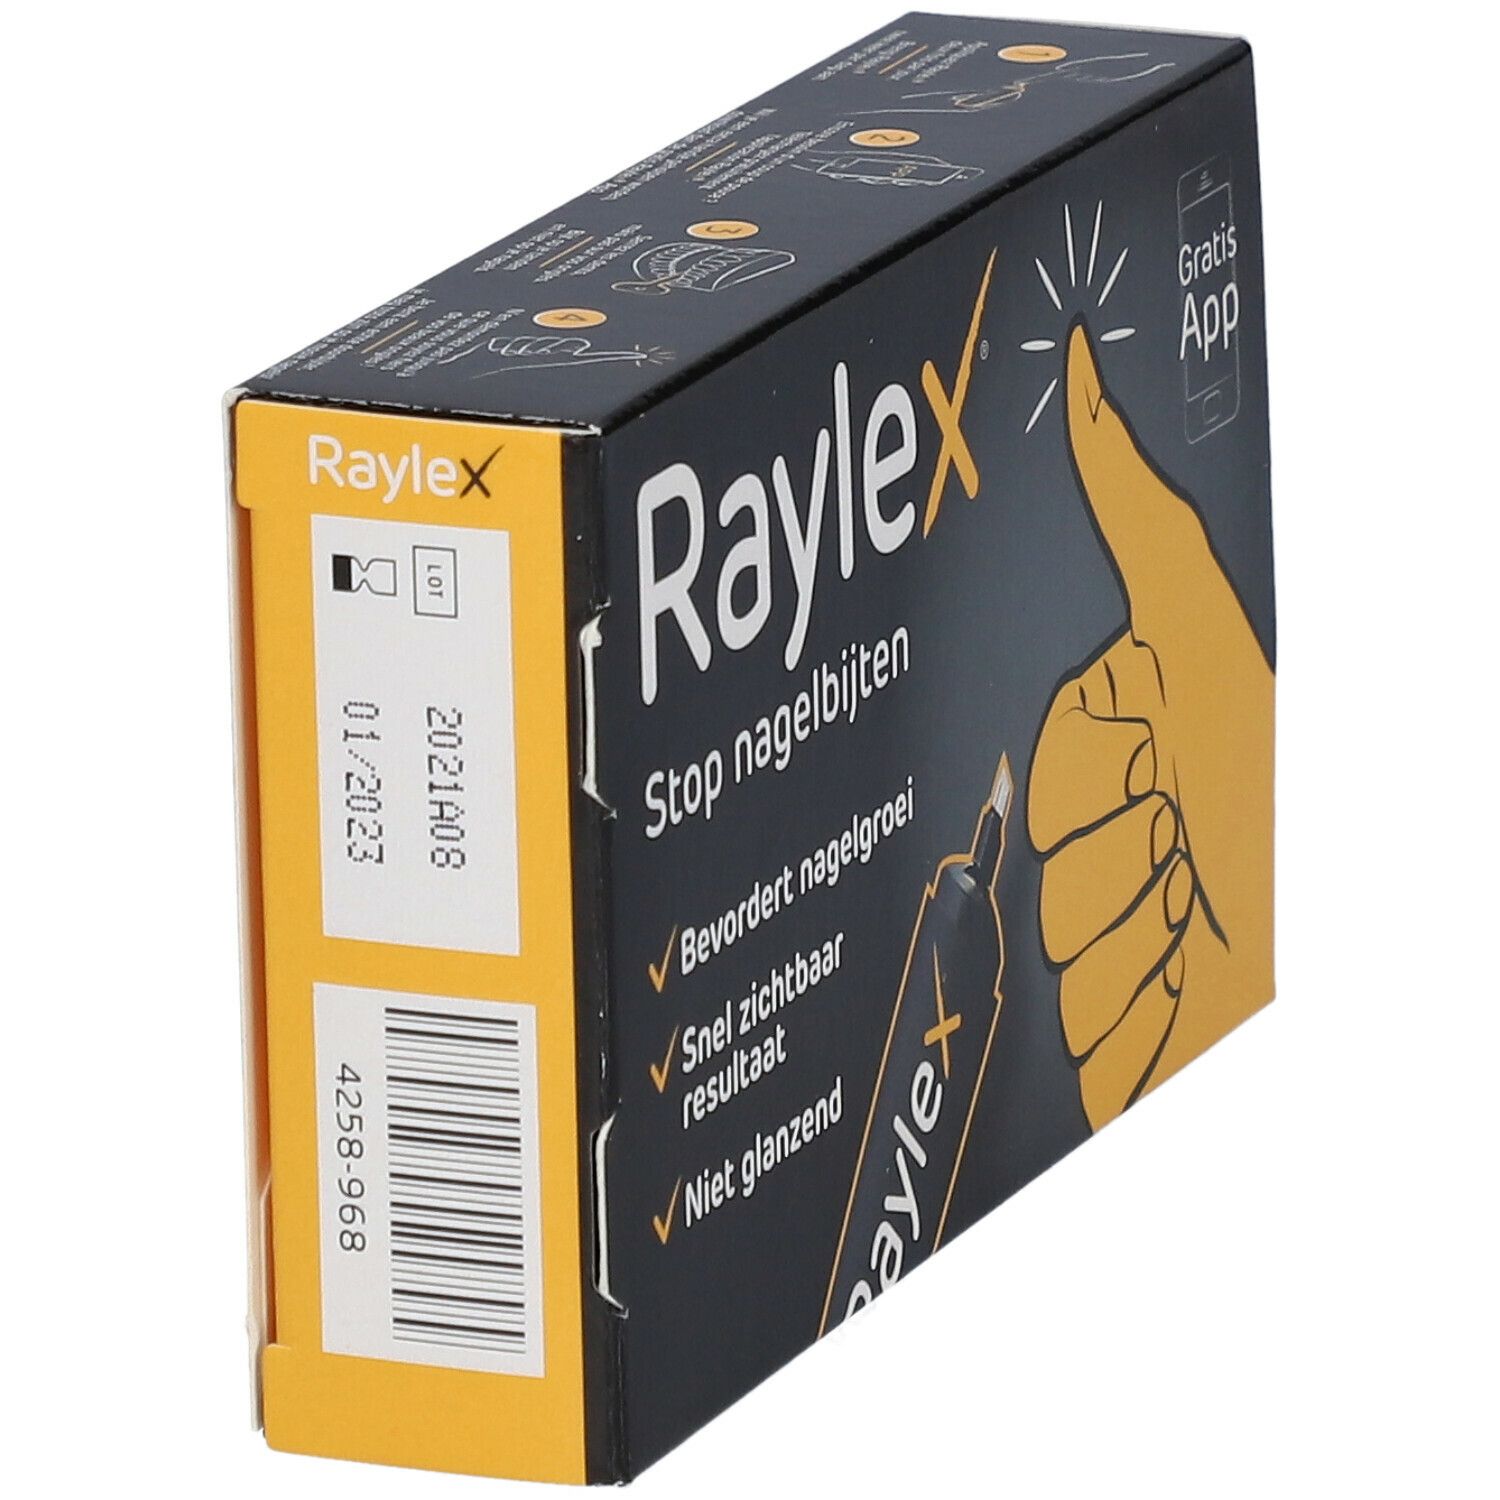 Raylex® Stylo Stop aux ongles rongés